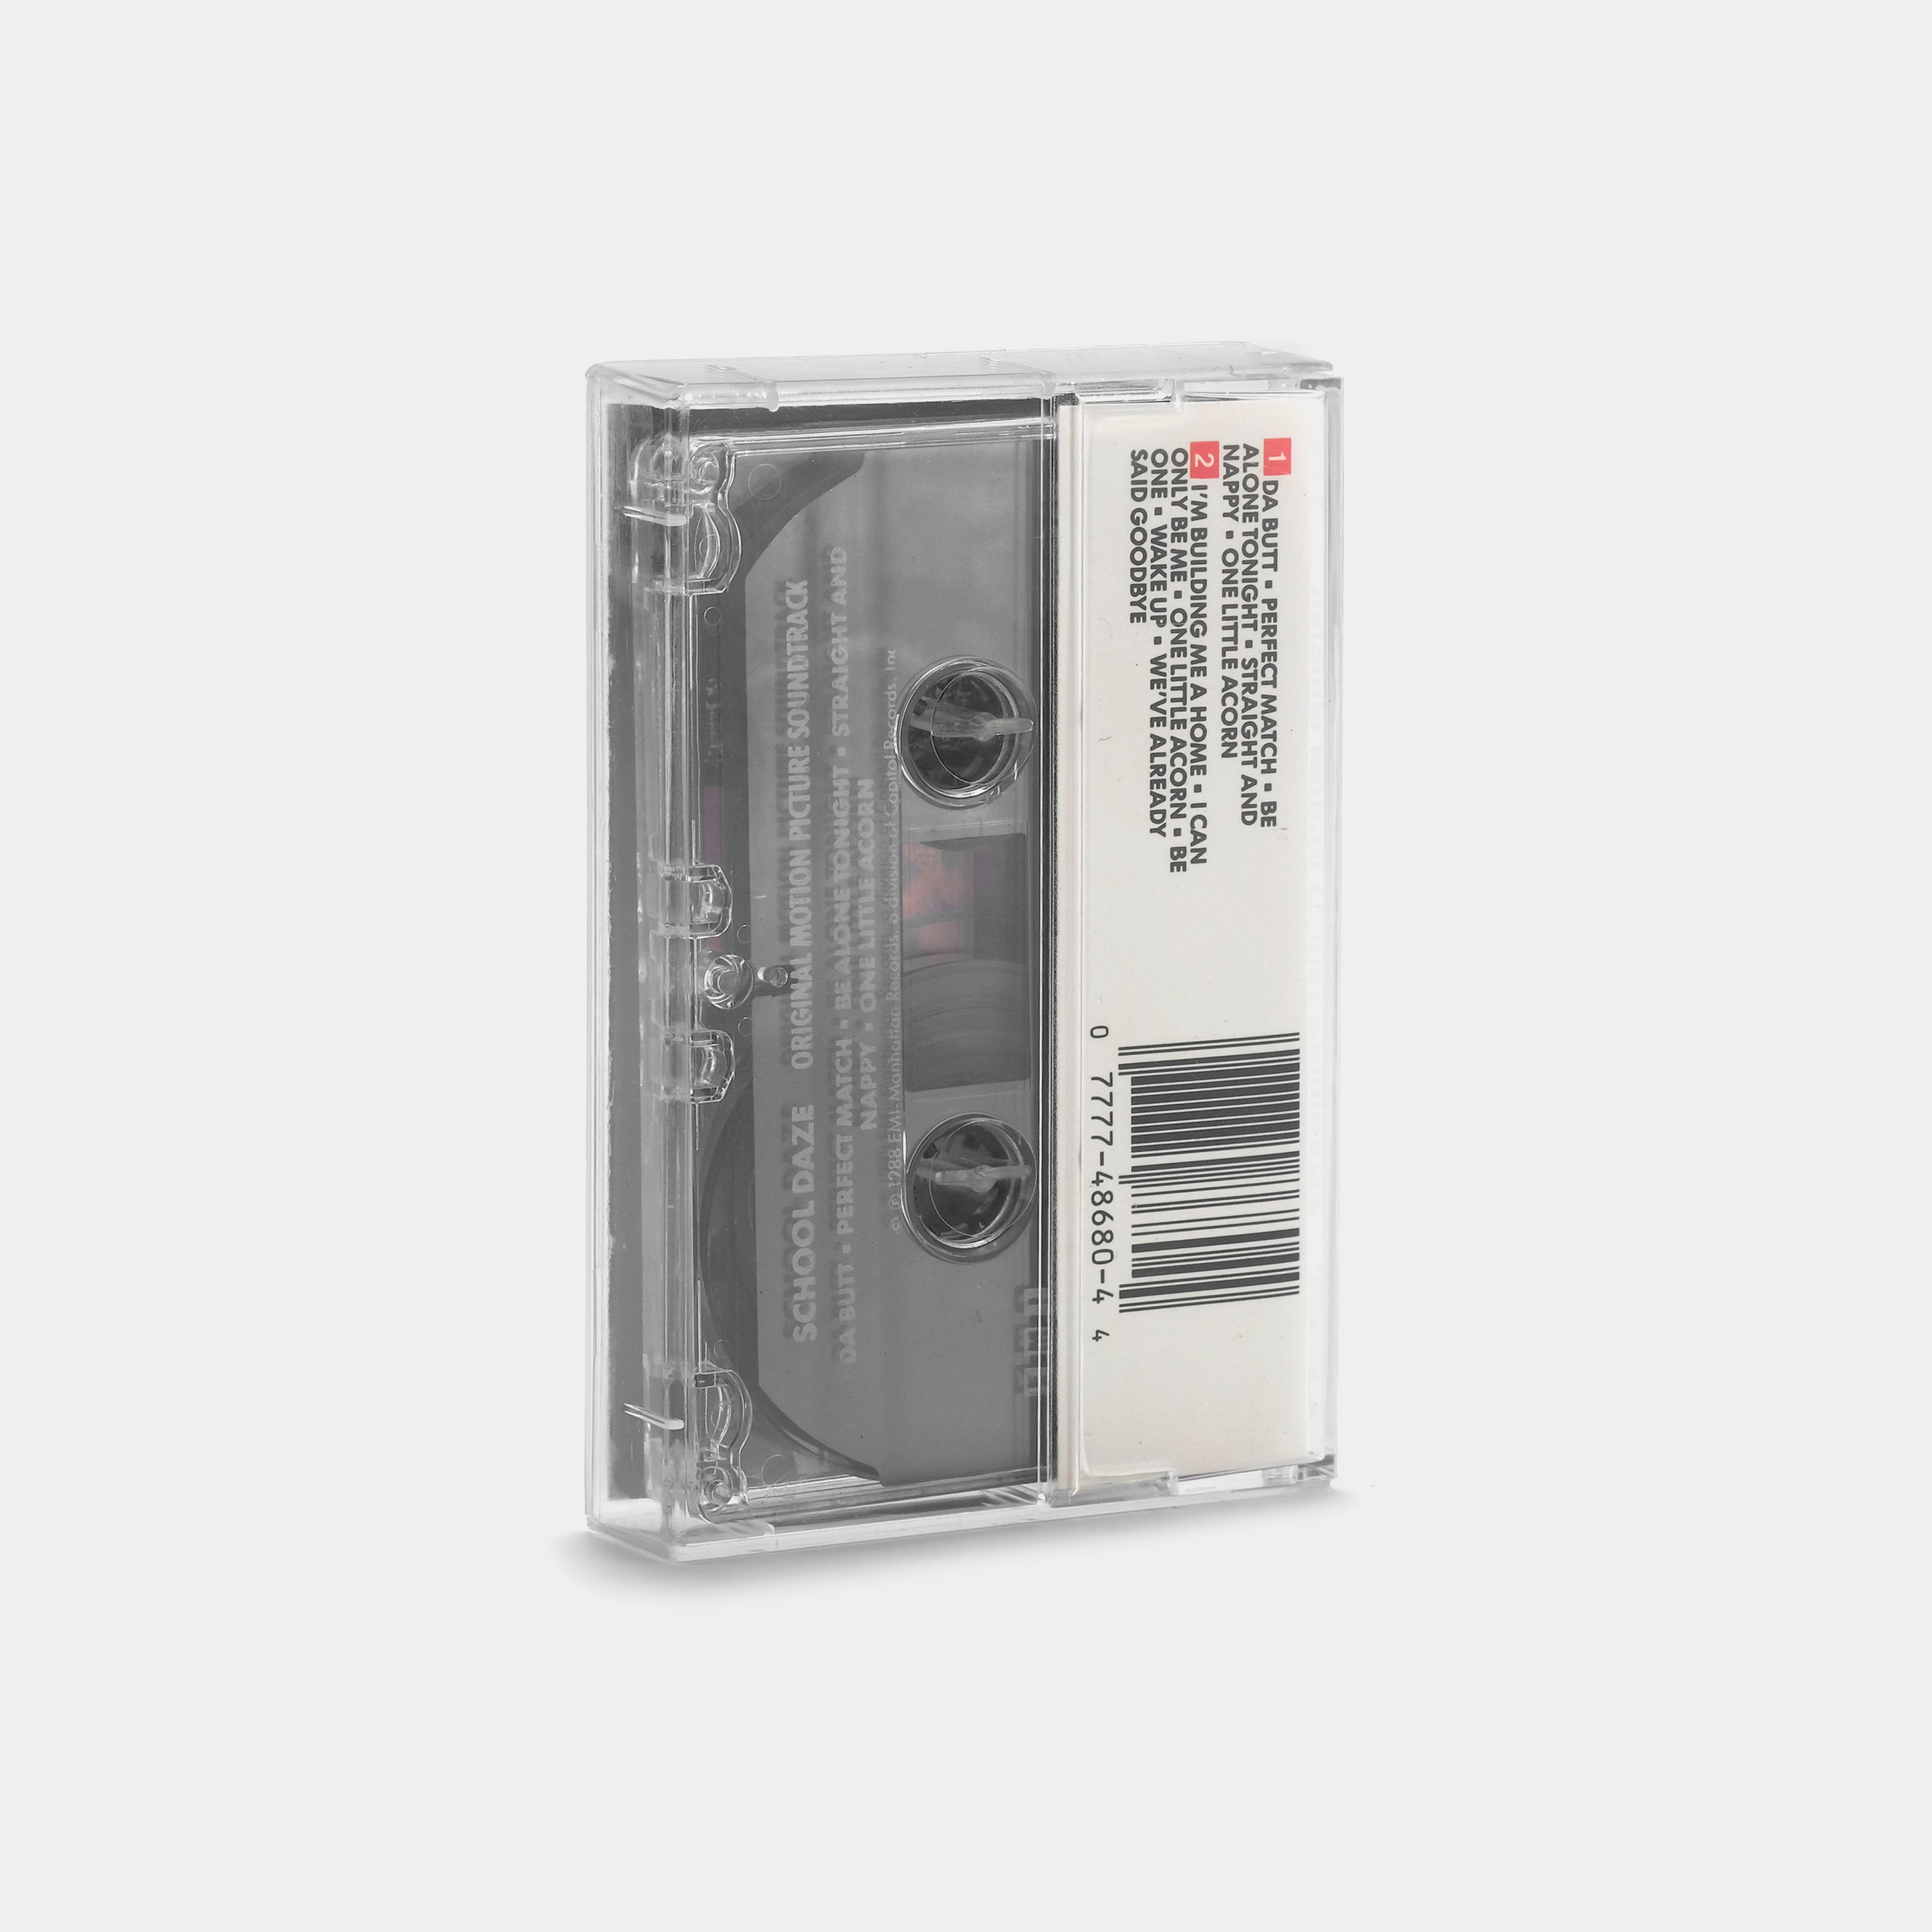 School Daze (Original Motion Picture Soundtrack) Cassette Tape